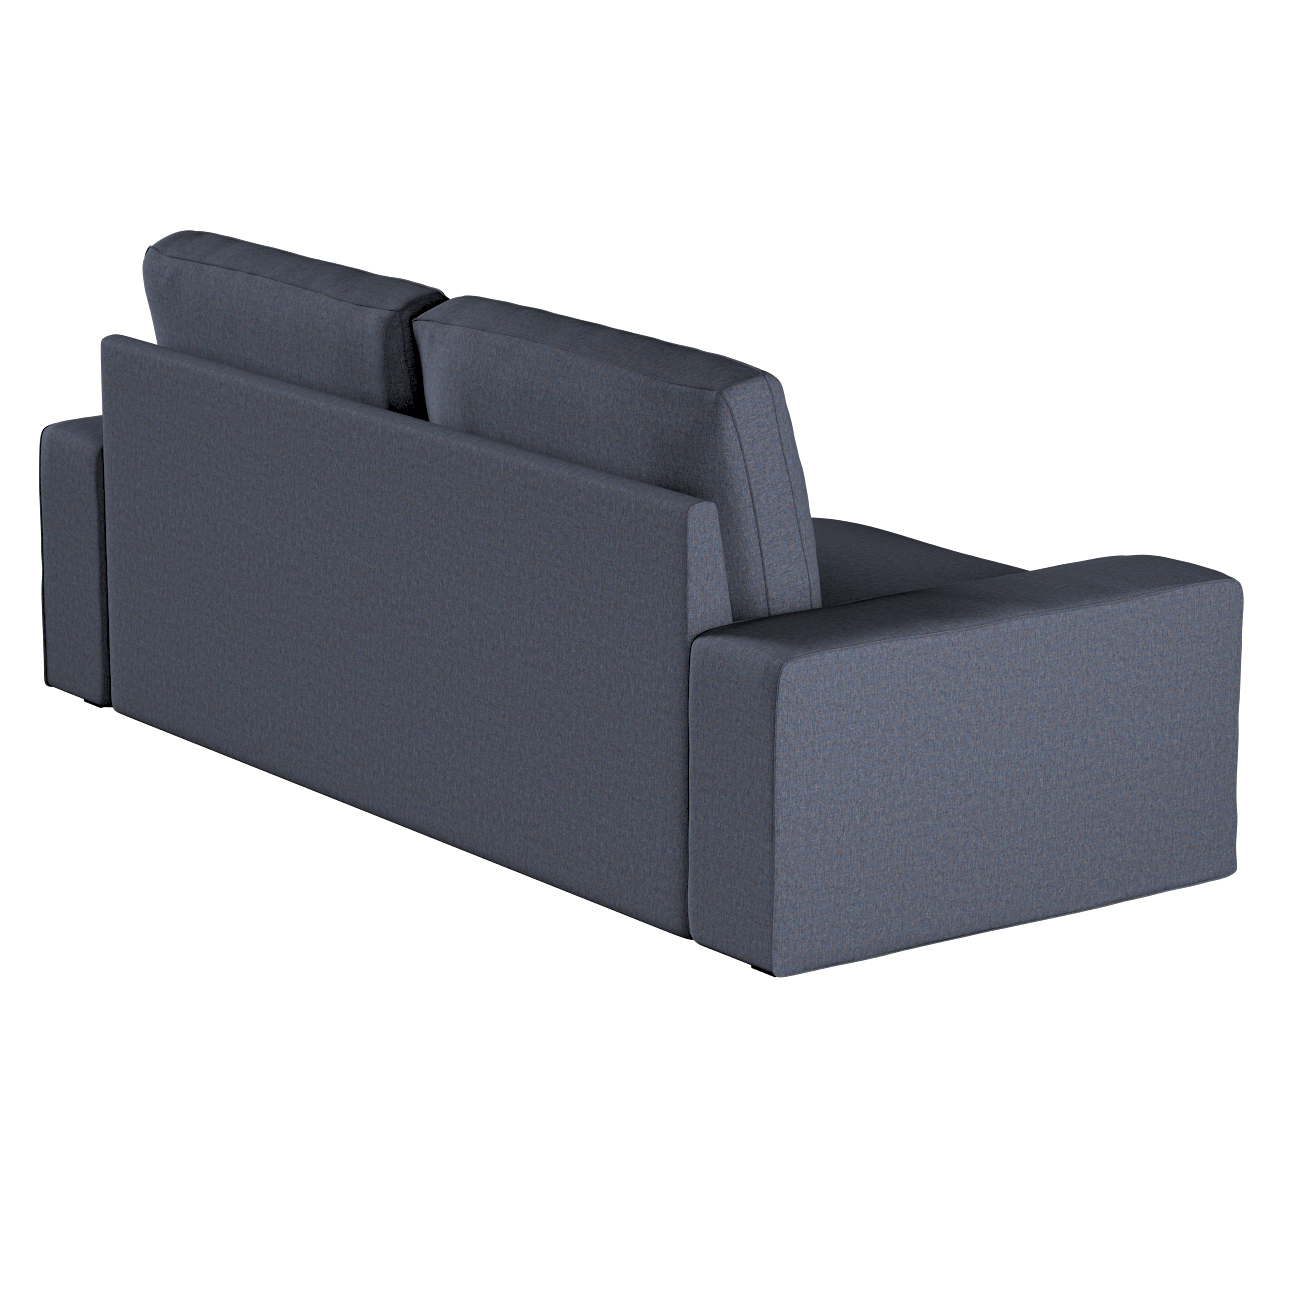 Bezug für Kivik 3-Sitzer Sofa, dunkelblau, Bezug für Sofa Kivik 3-Sitzer, M günstig online kaufen